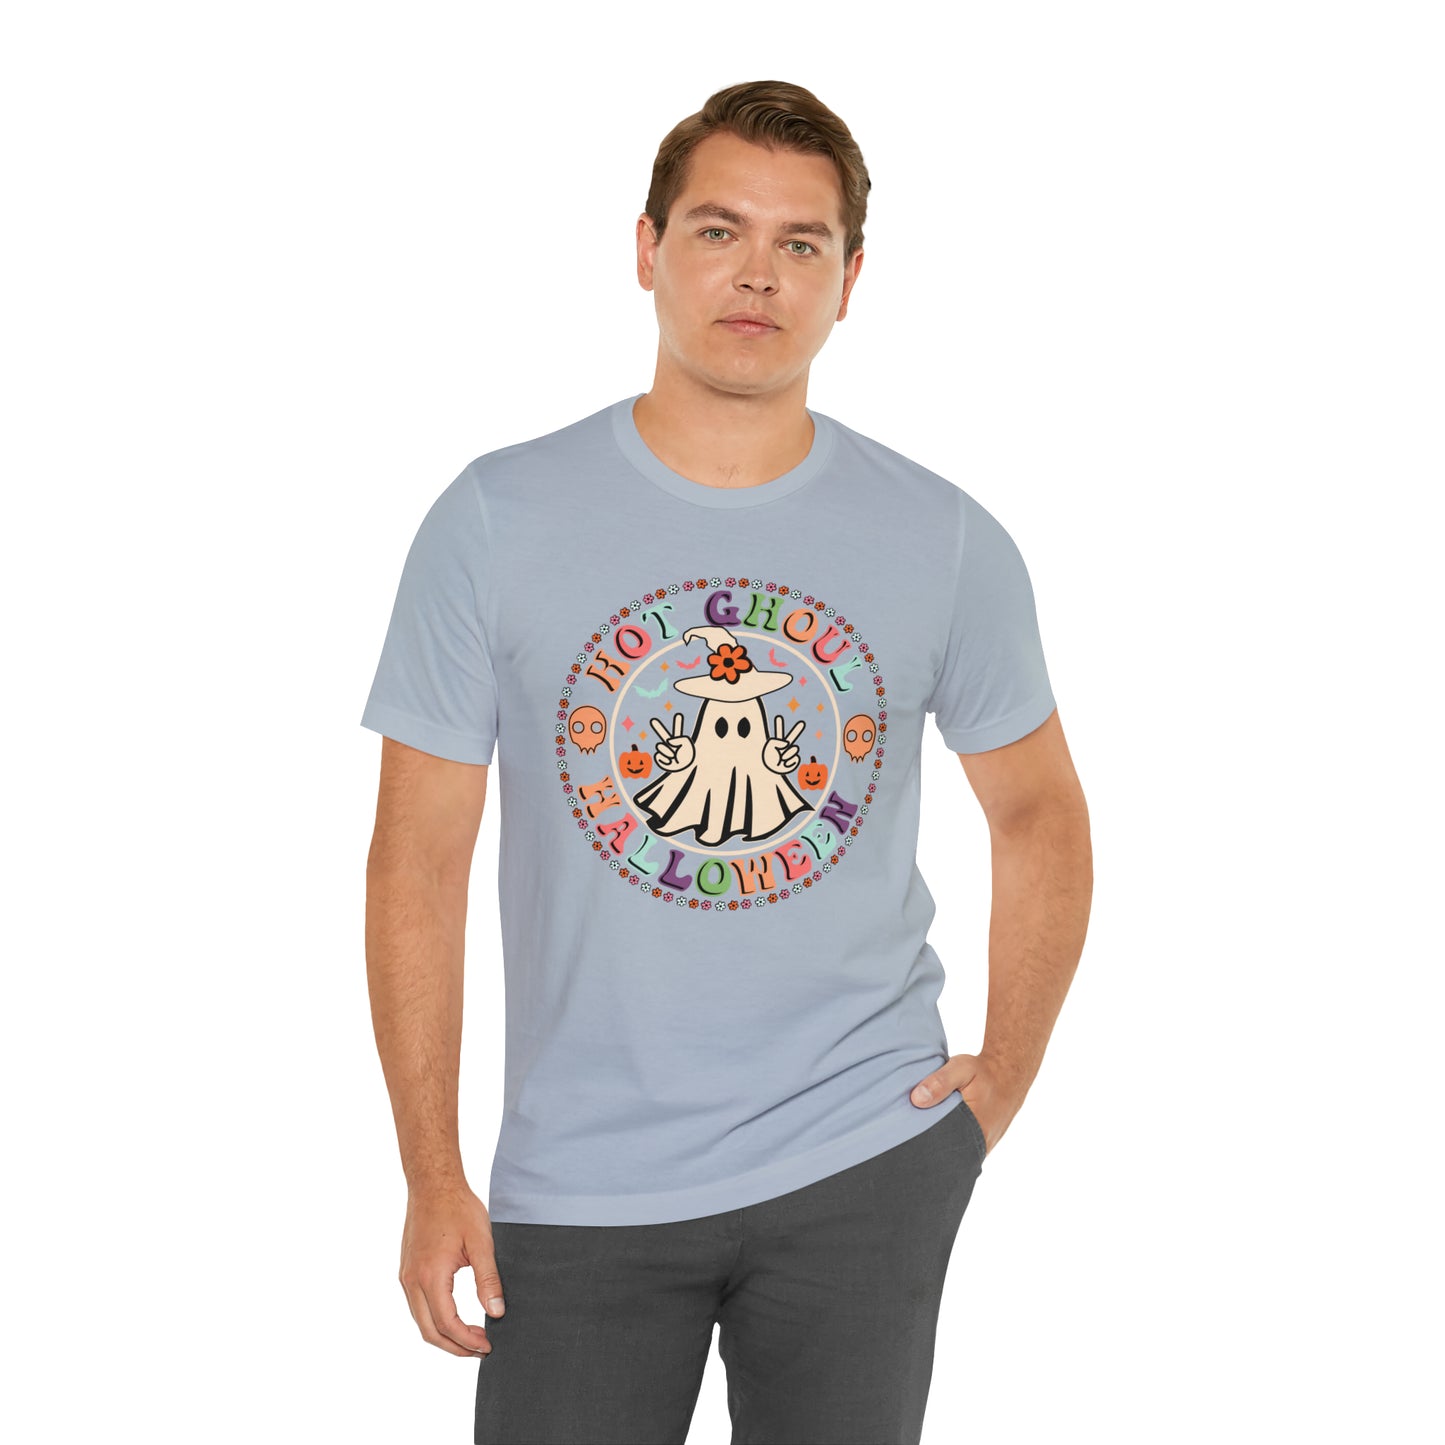 Lets Go Ghouls Shirt, Spooky Season Tee, Retro Halloween Cowgirl Shirt, Cowgirl Halloween Shirt, Vintage Ghost Shirt, T765